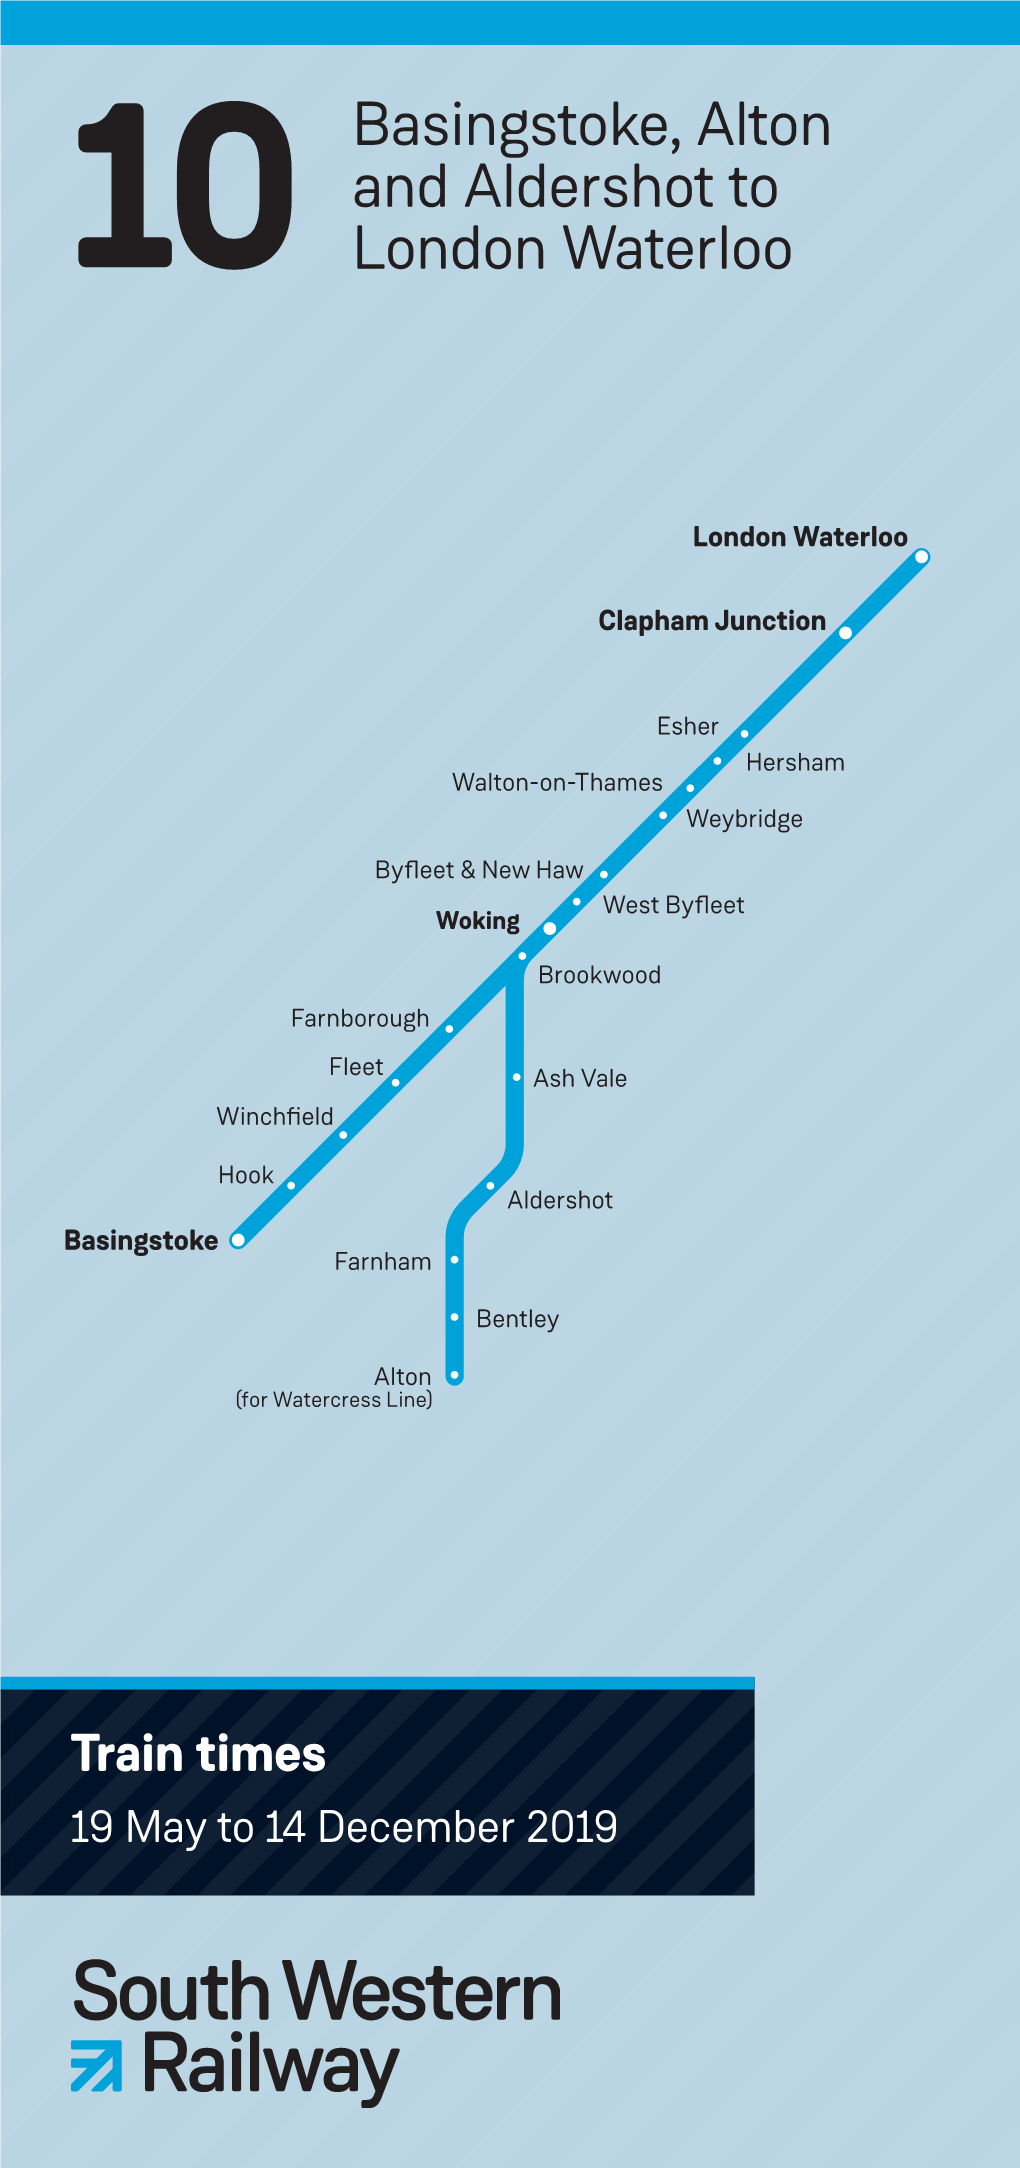 10 Basingstoke, Alton and Aldershot to London Waterloo